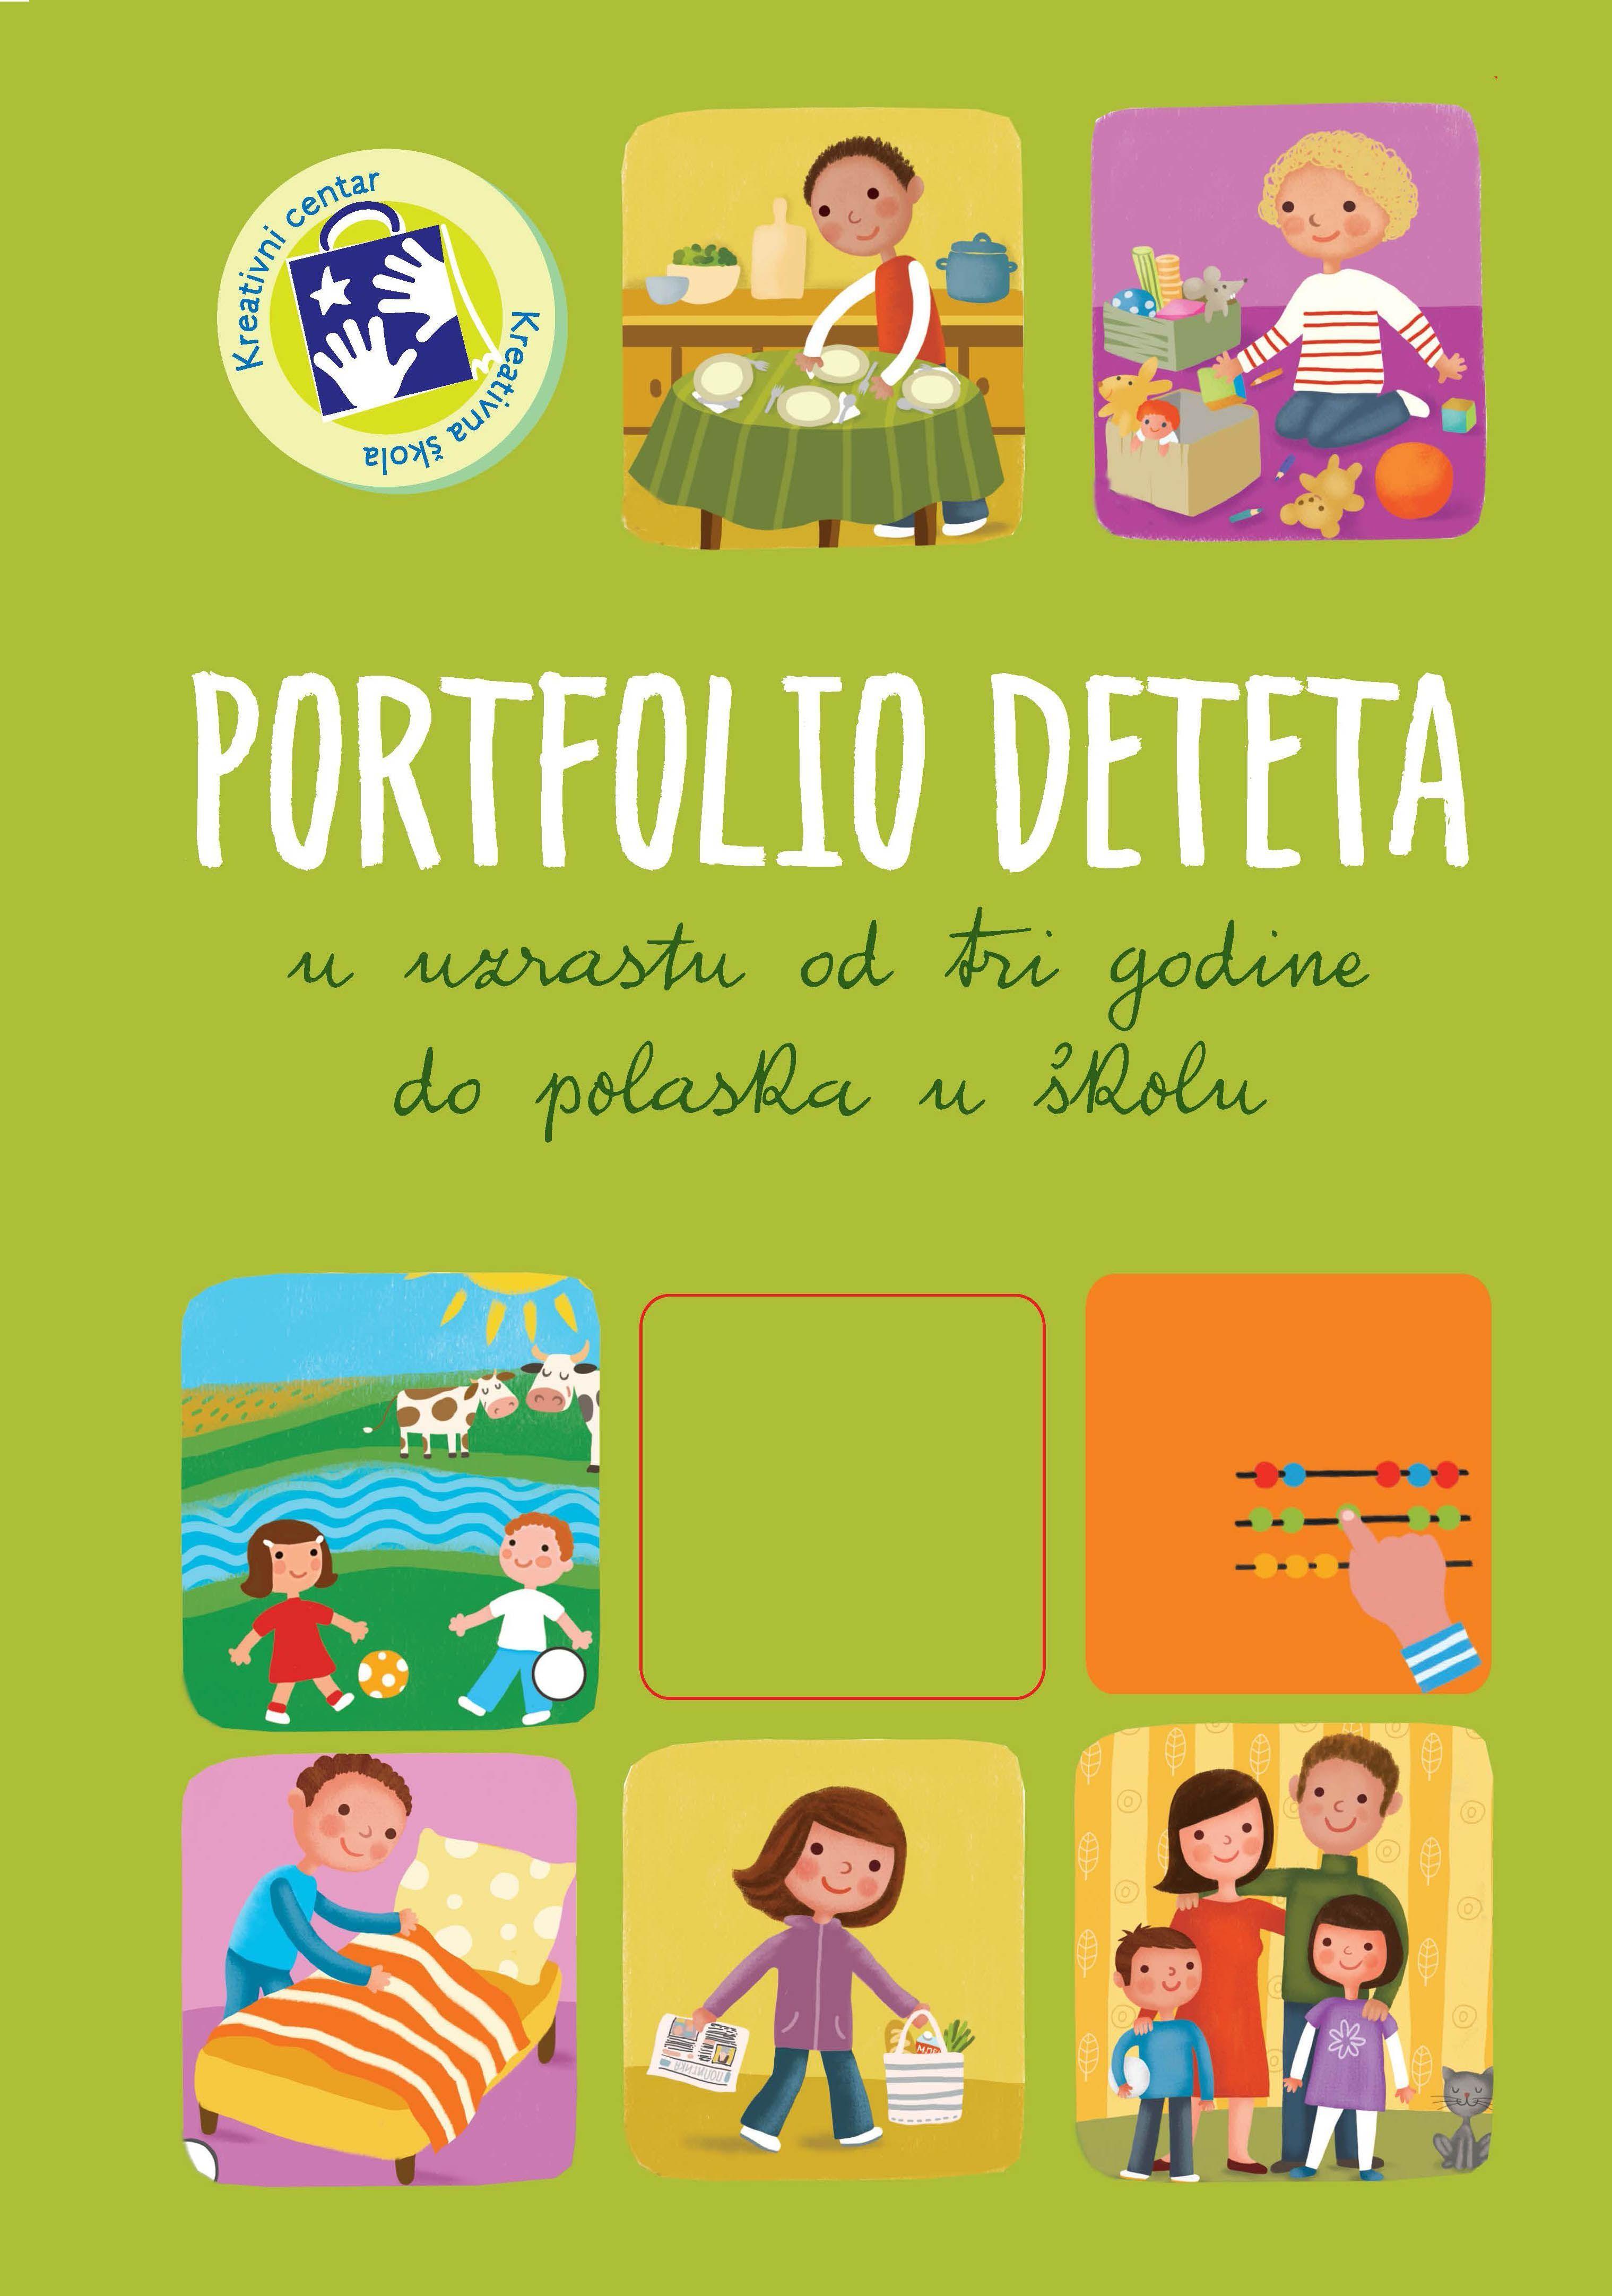 Portfolio deteta - latinica